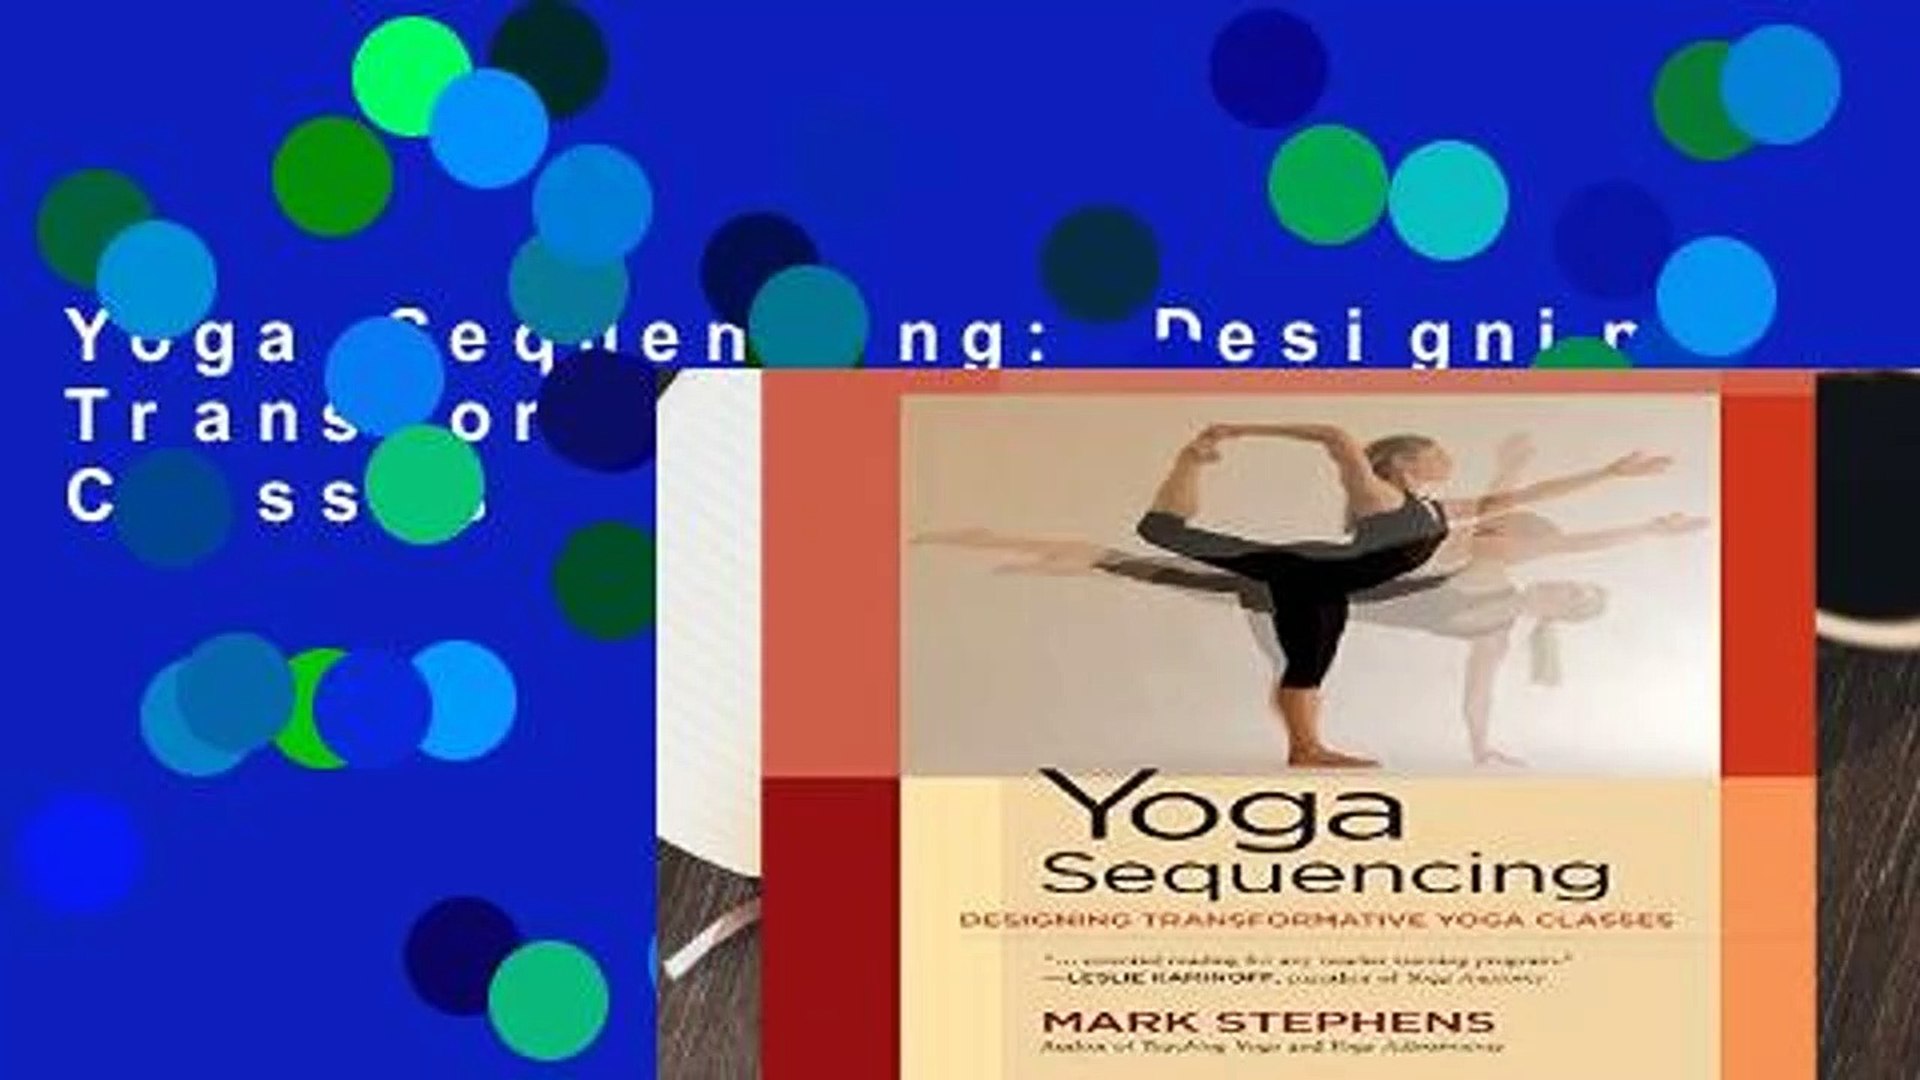 Yoga Sequencing: Designing Transformative Yoga Classes